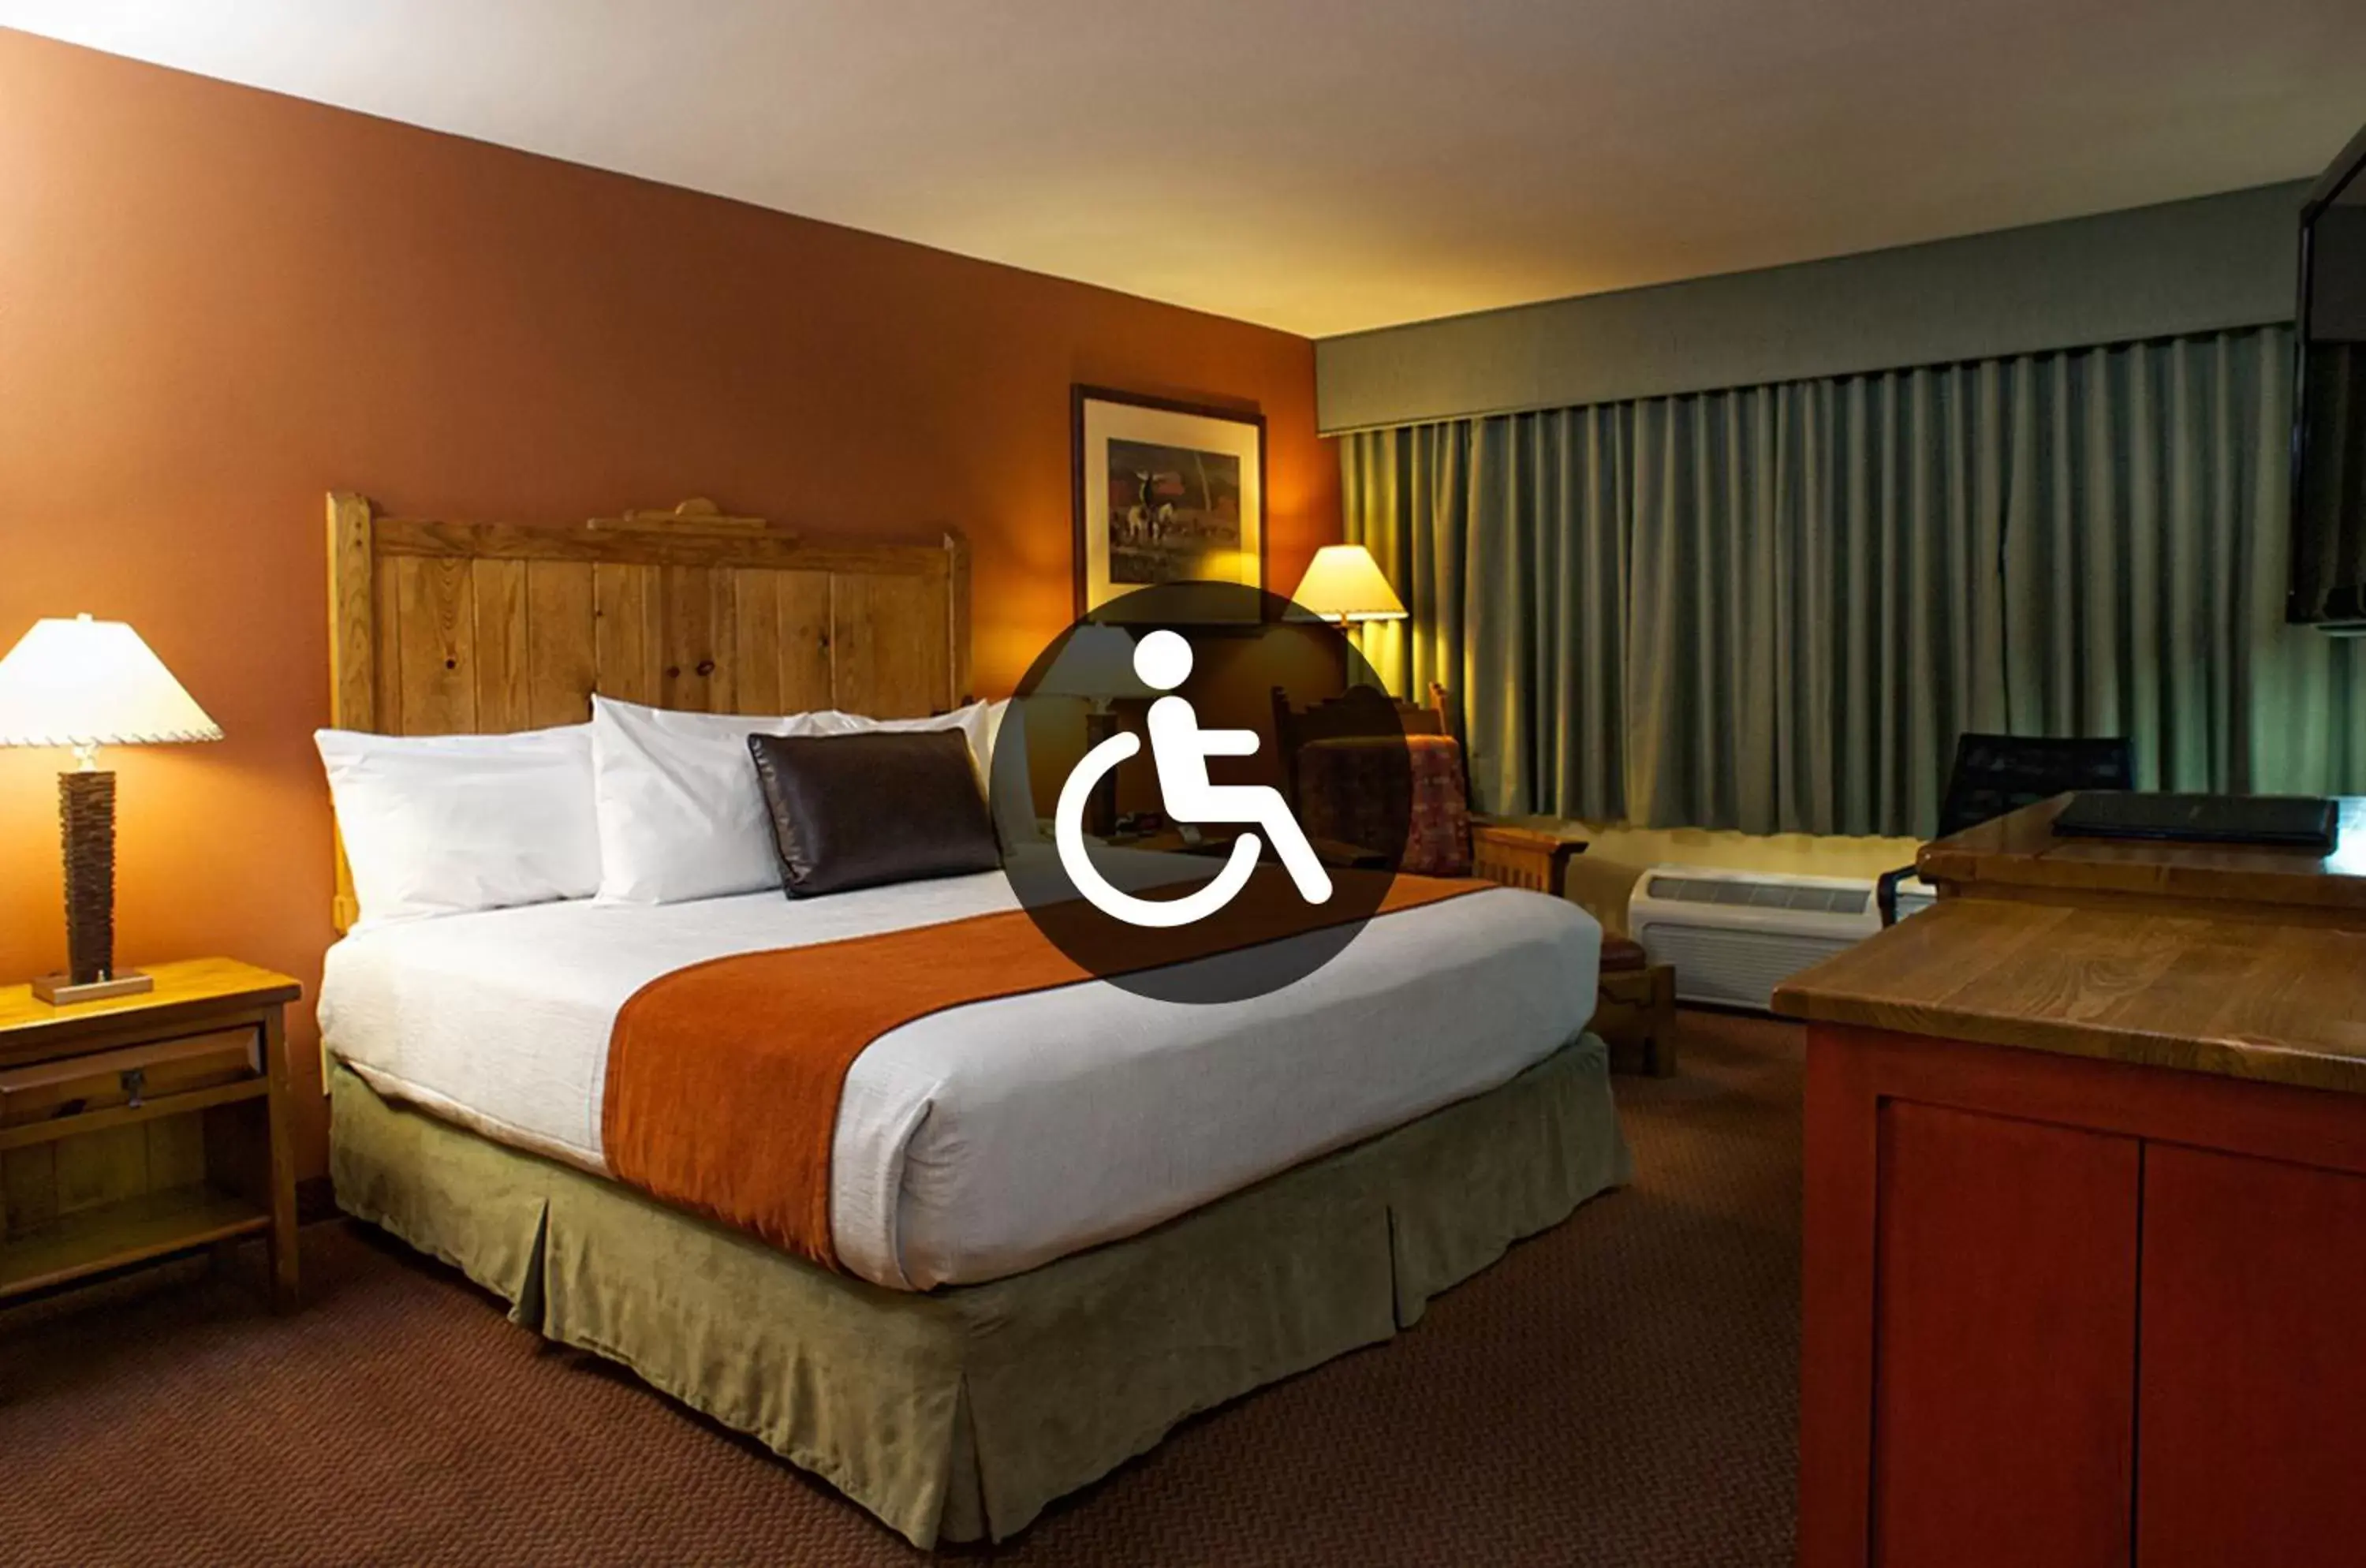 King Room - Disability Access Roll in Shower in Best Western Plus Rio Grande Inn